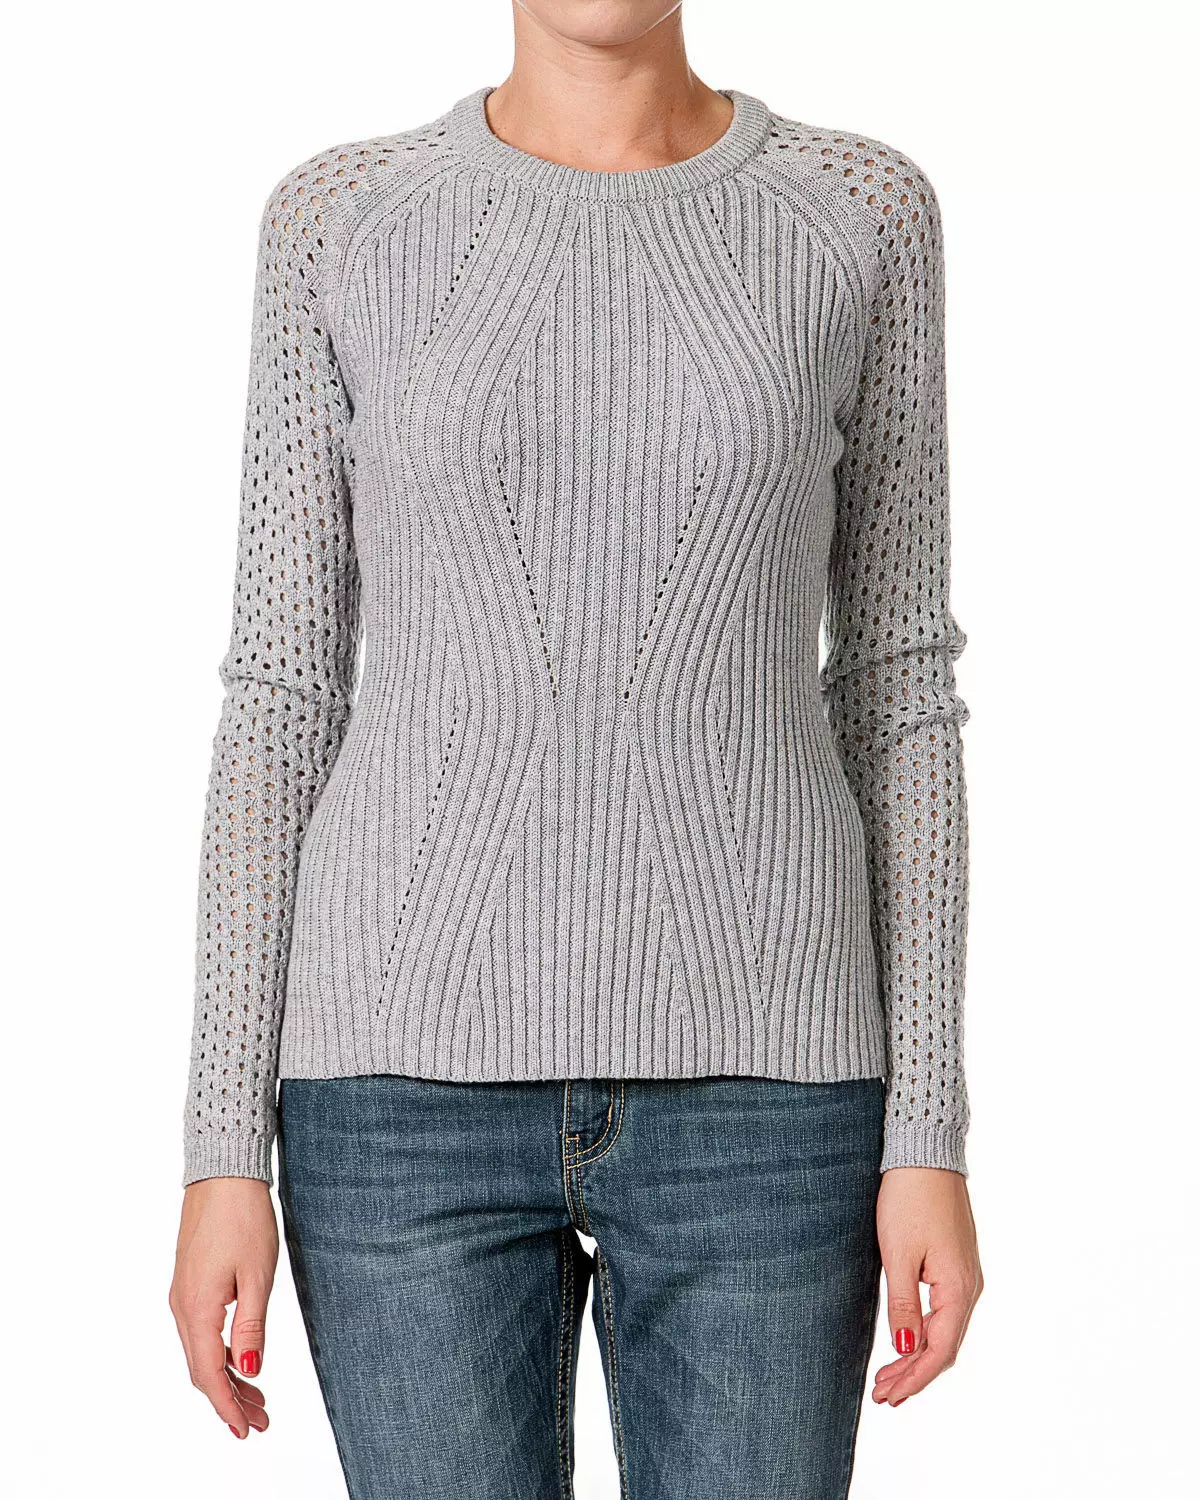 Sweater: Apa itu, perbezaan dari jumper, kardigan dan sweatshirt 1012_21